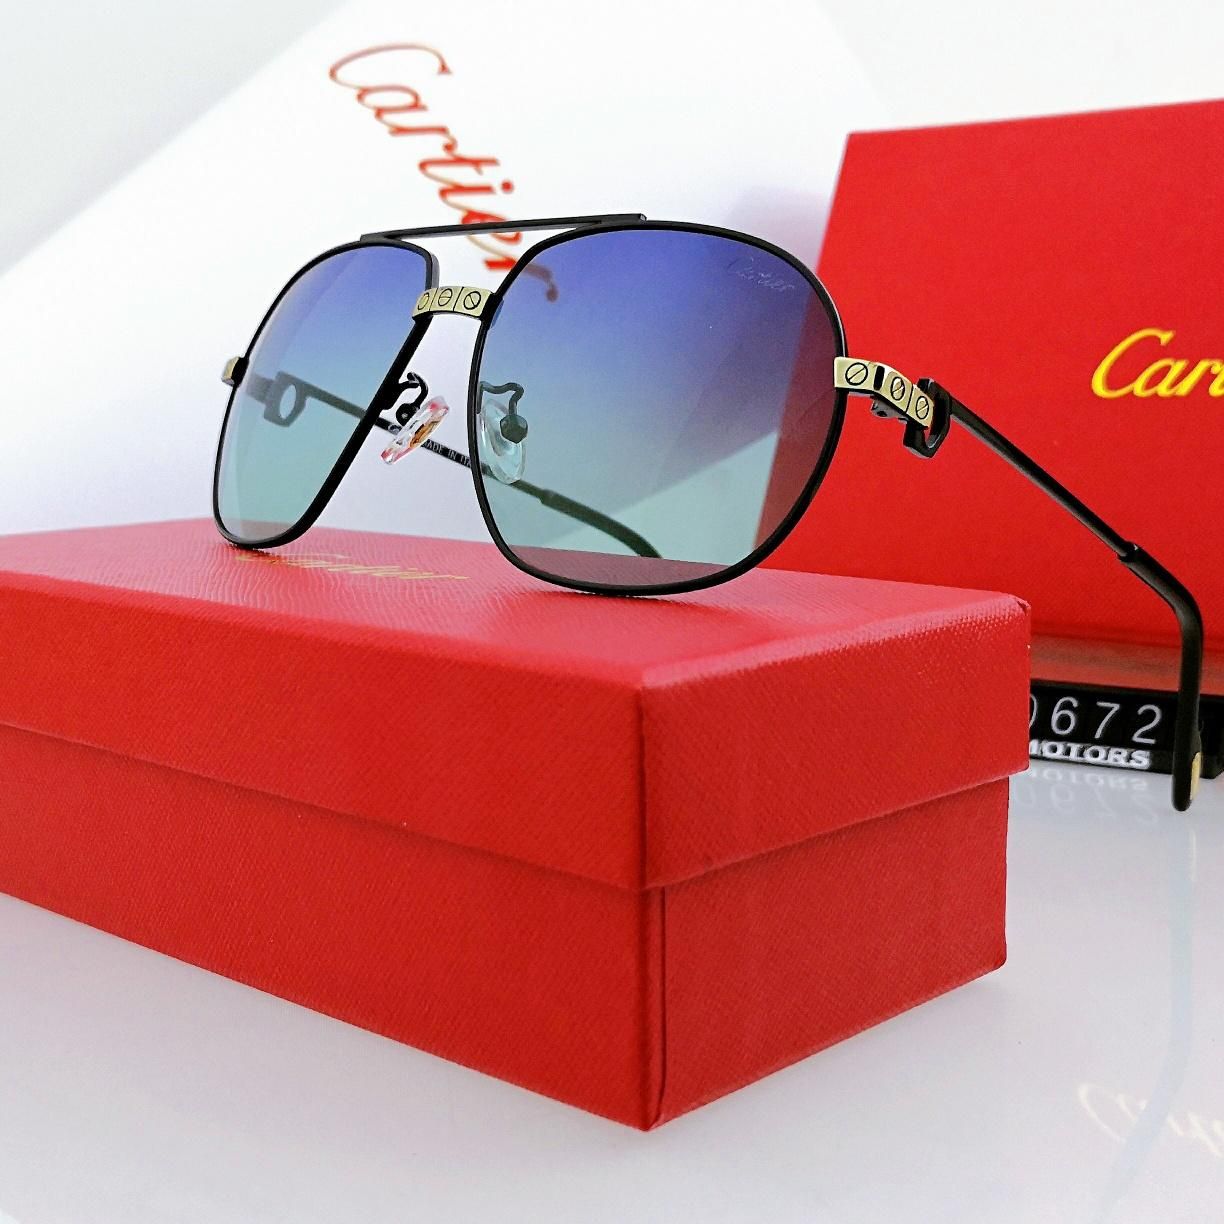 dhgate cartier sunglasses